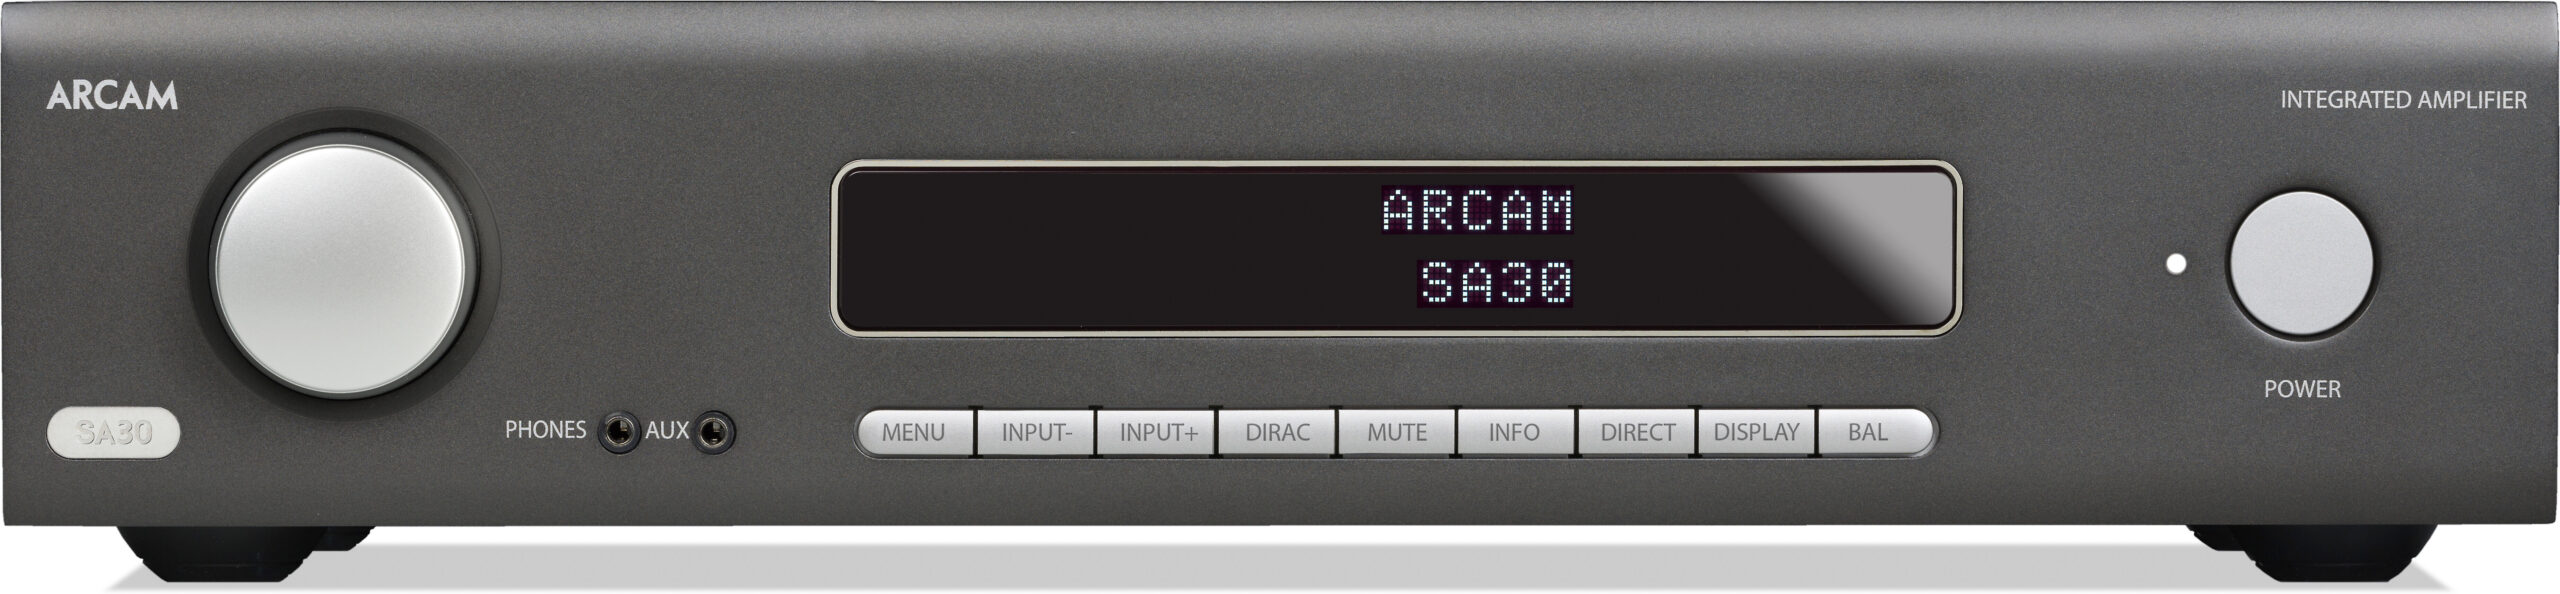 Arcam-SA30-amplifier-front panel